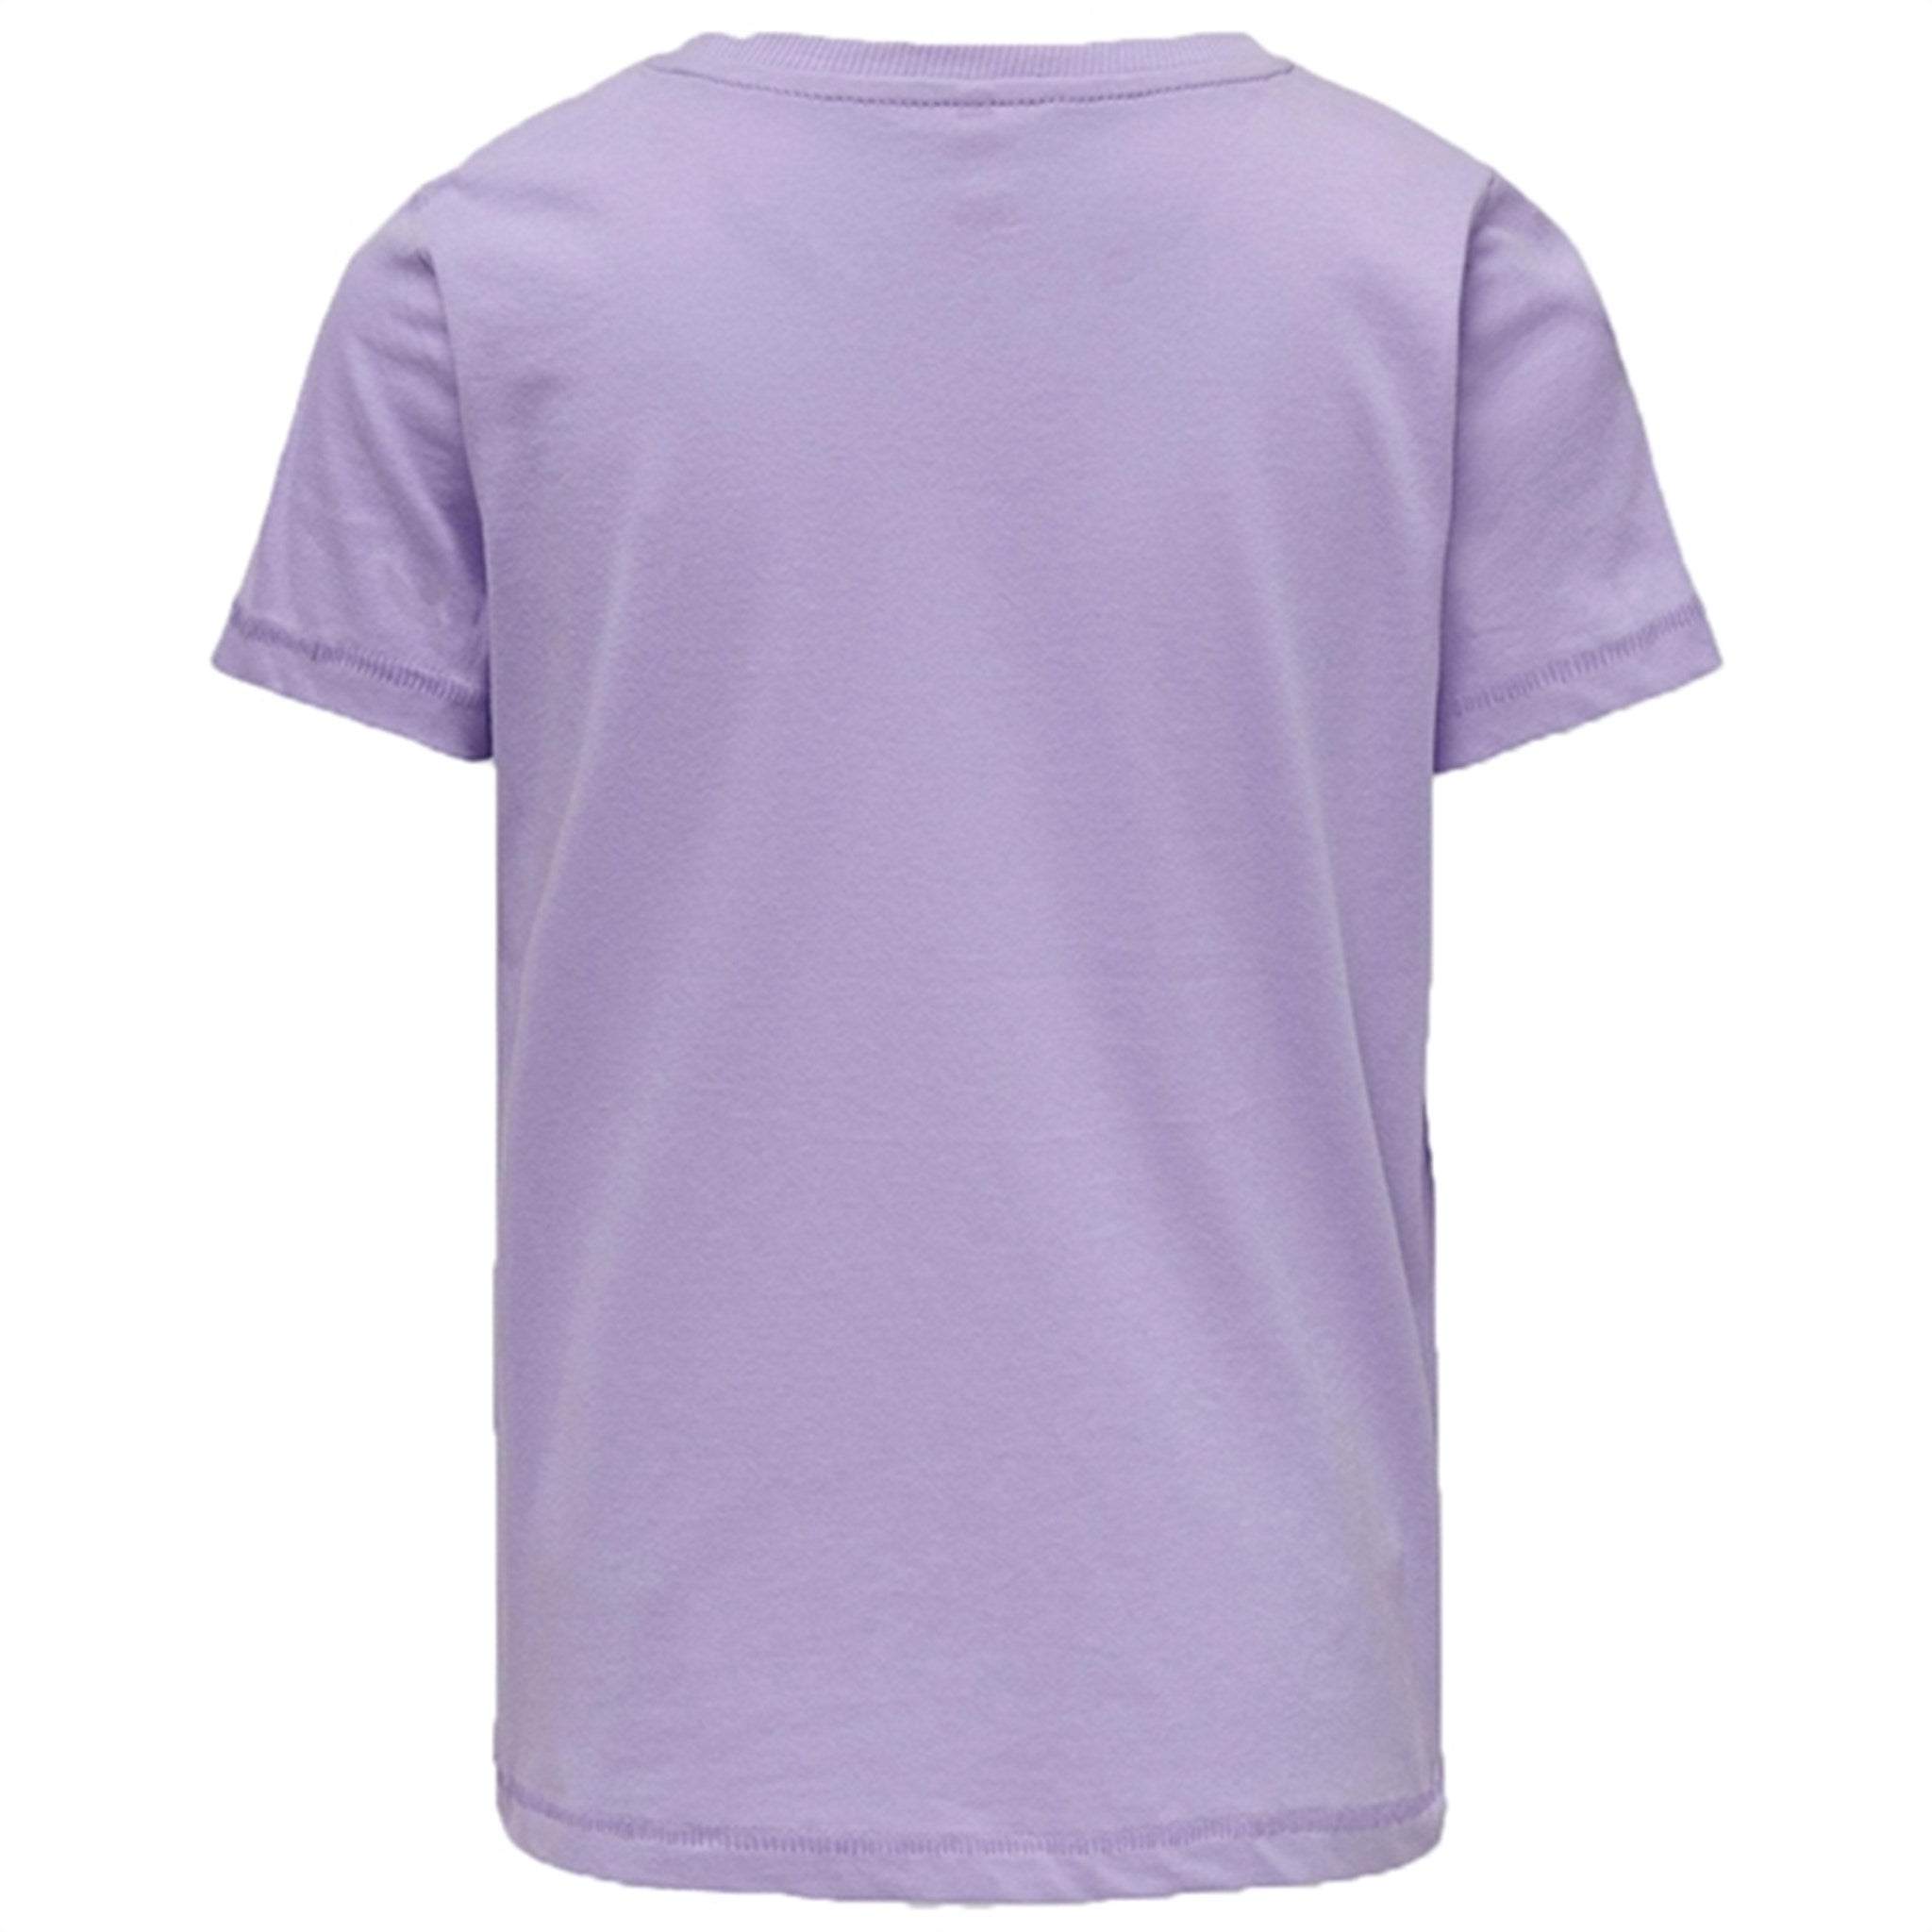 Kids ONLY Purple Rose Emma Flower T-shirt 2